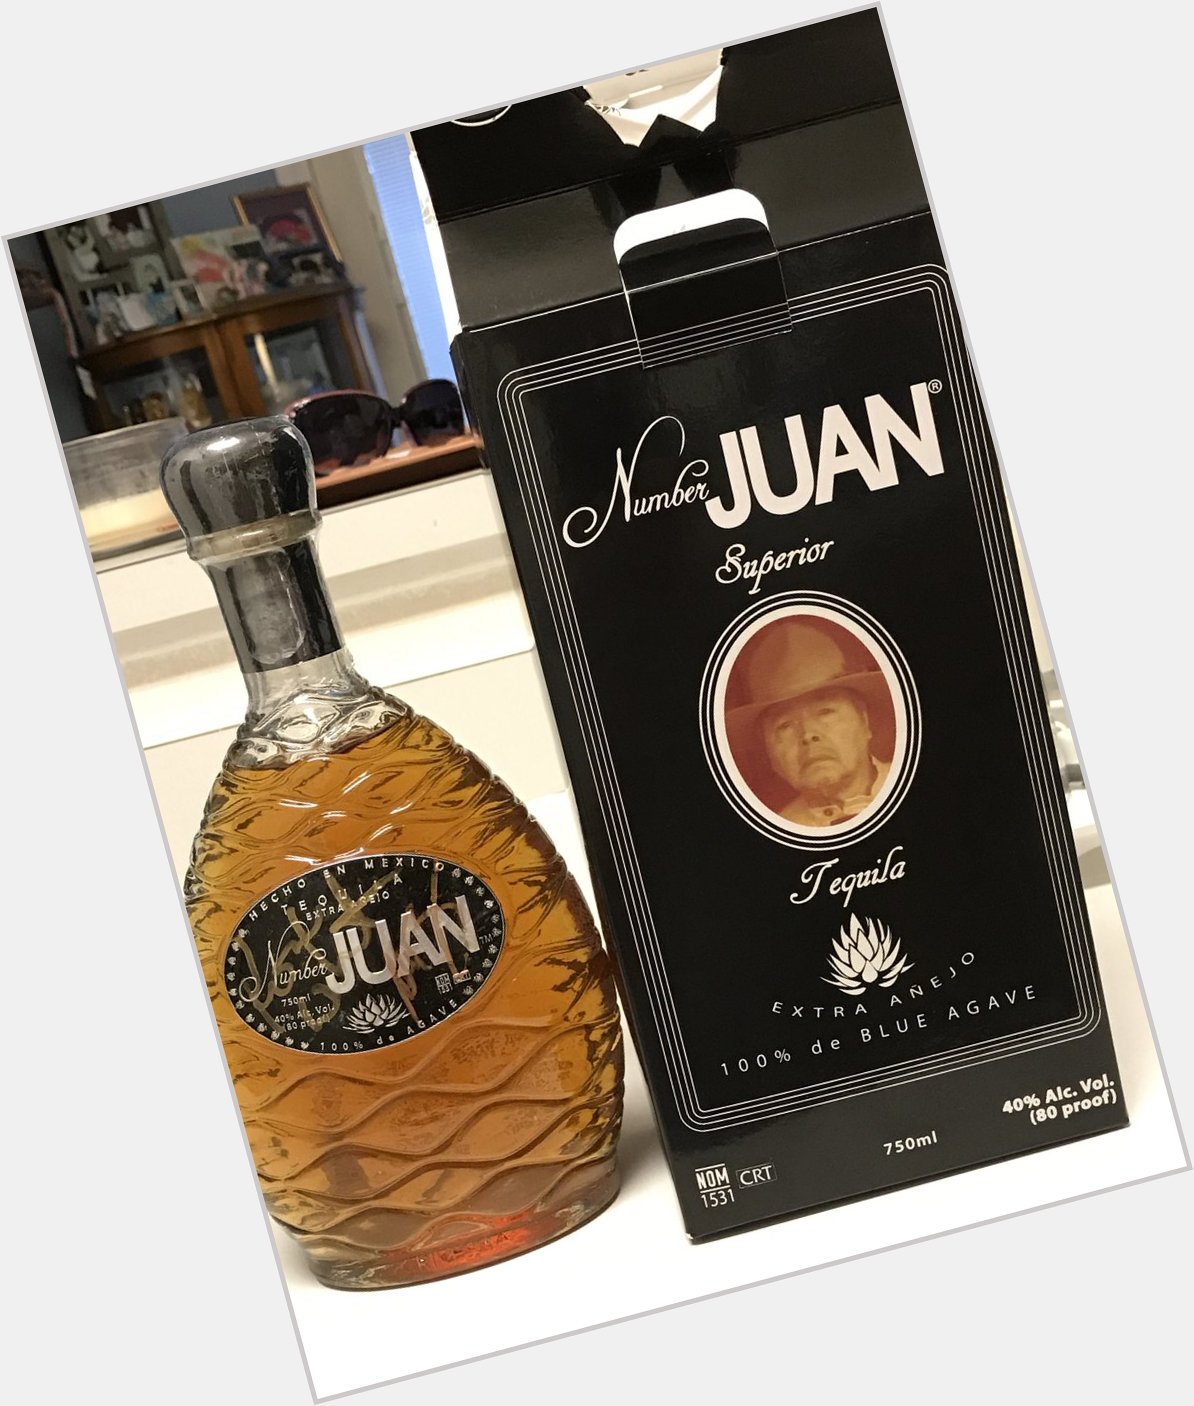  Happy Birthday! Enjoy some Number Juan Tequila! 